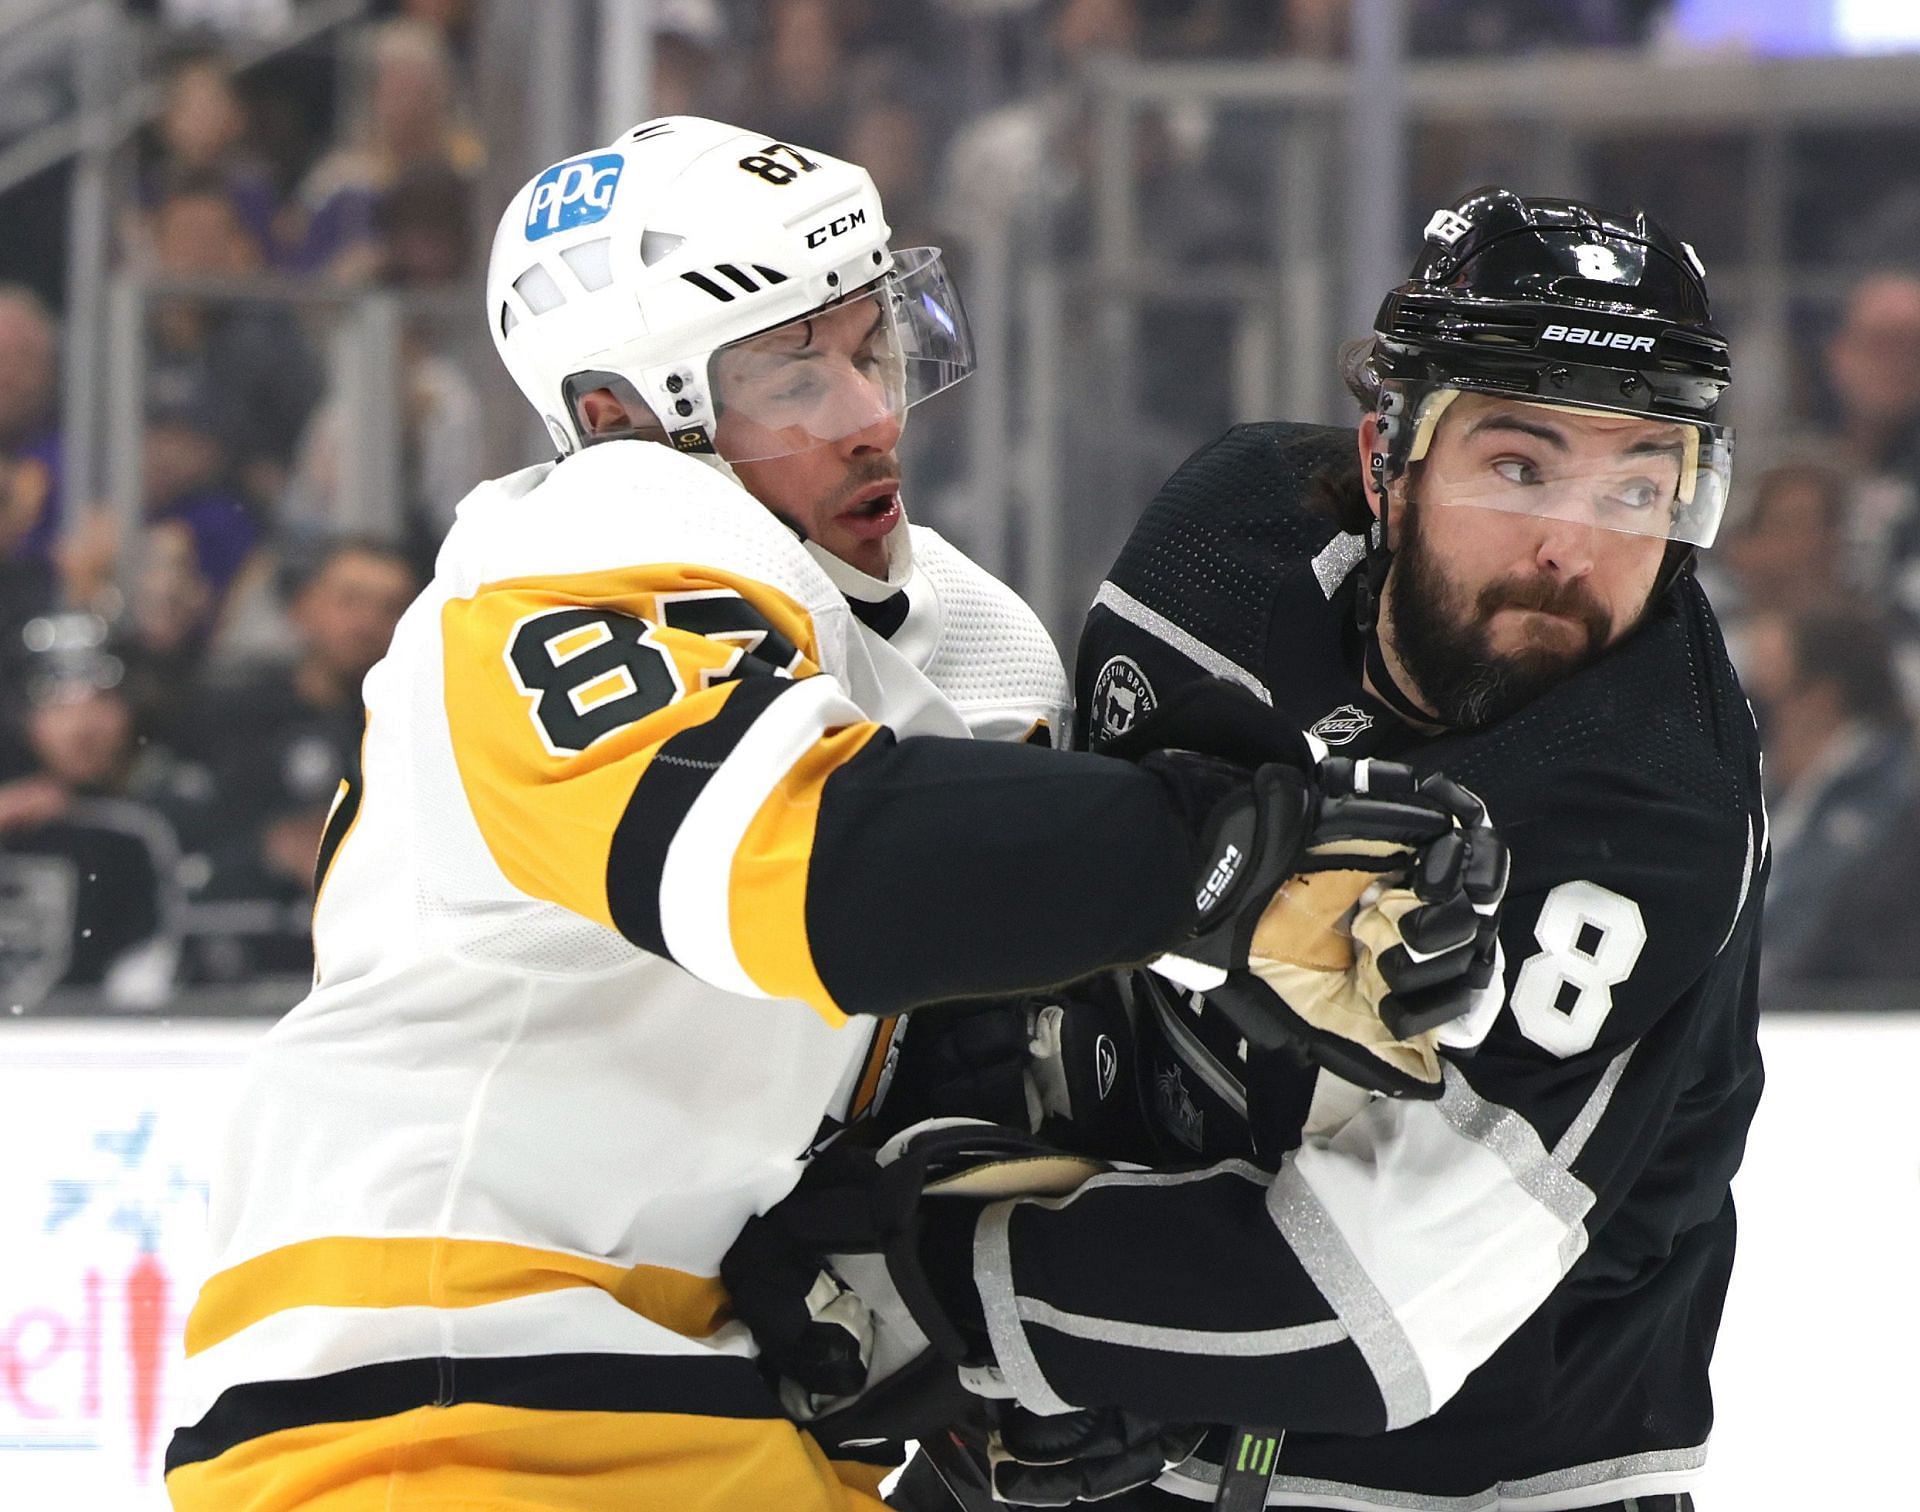 Thrashers spoil night for Crosby, Penguins